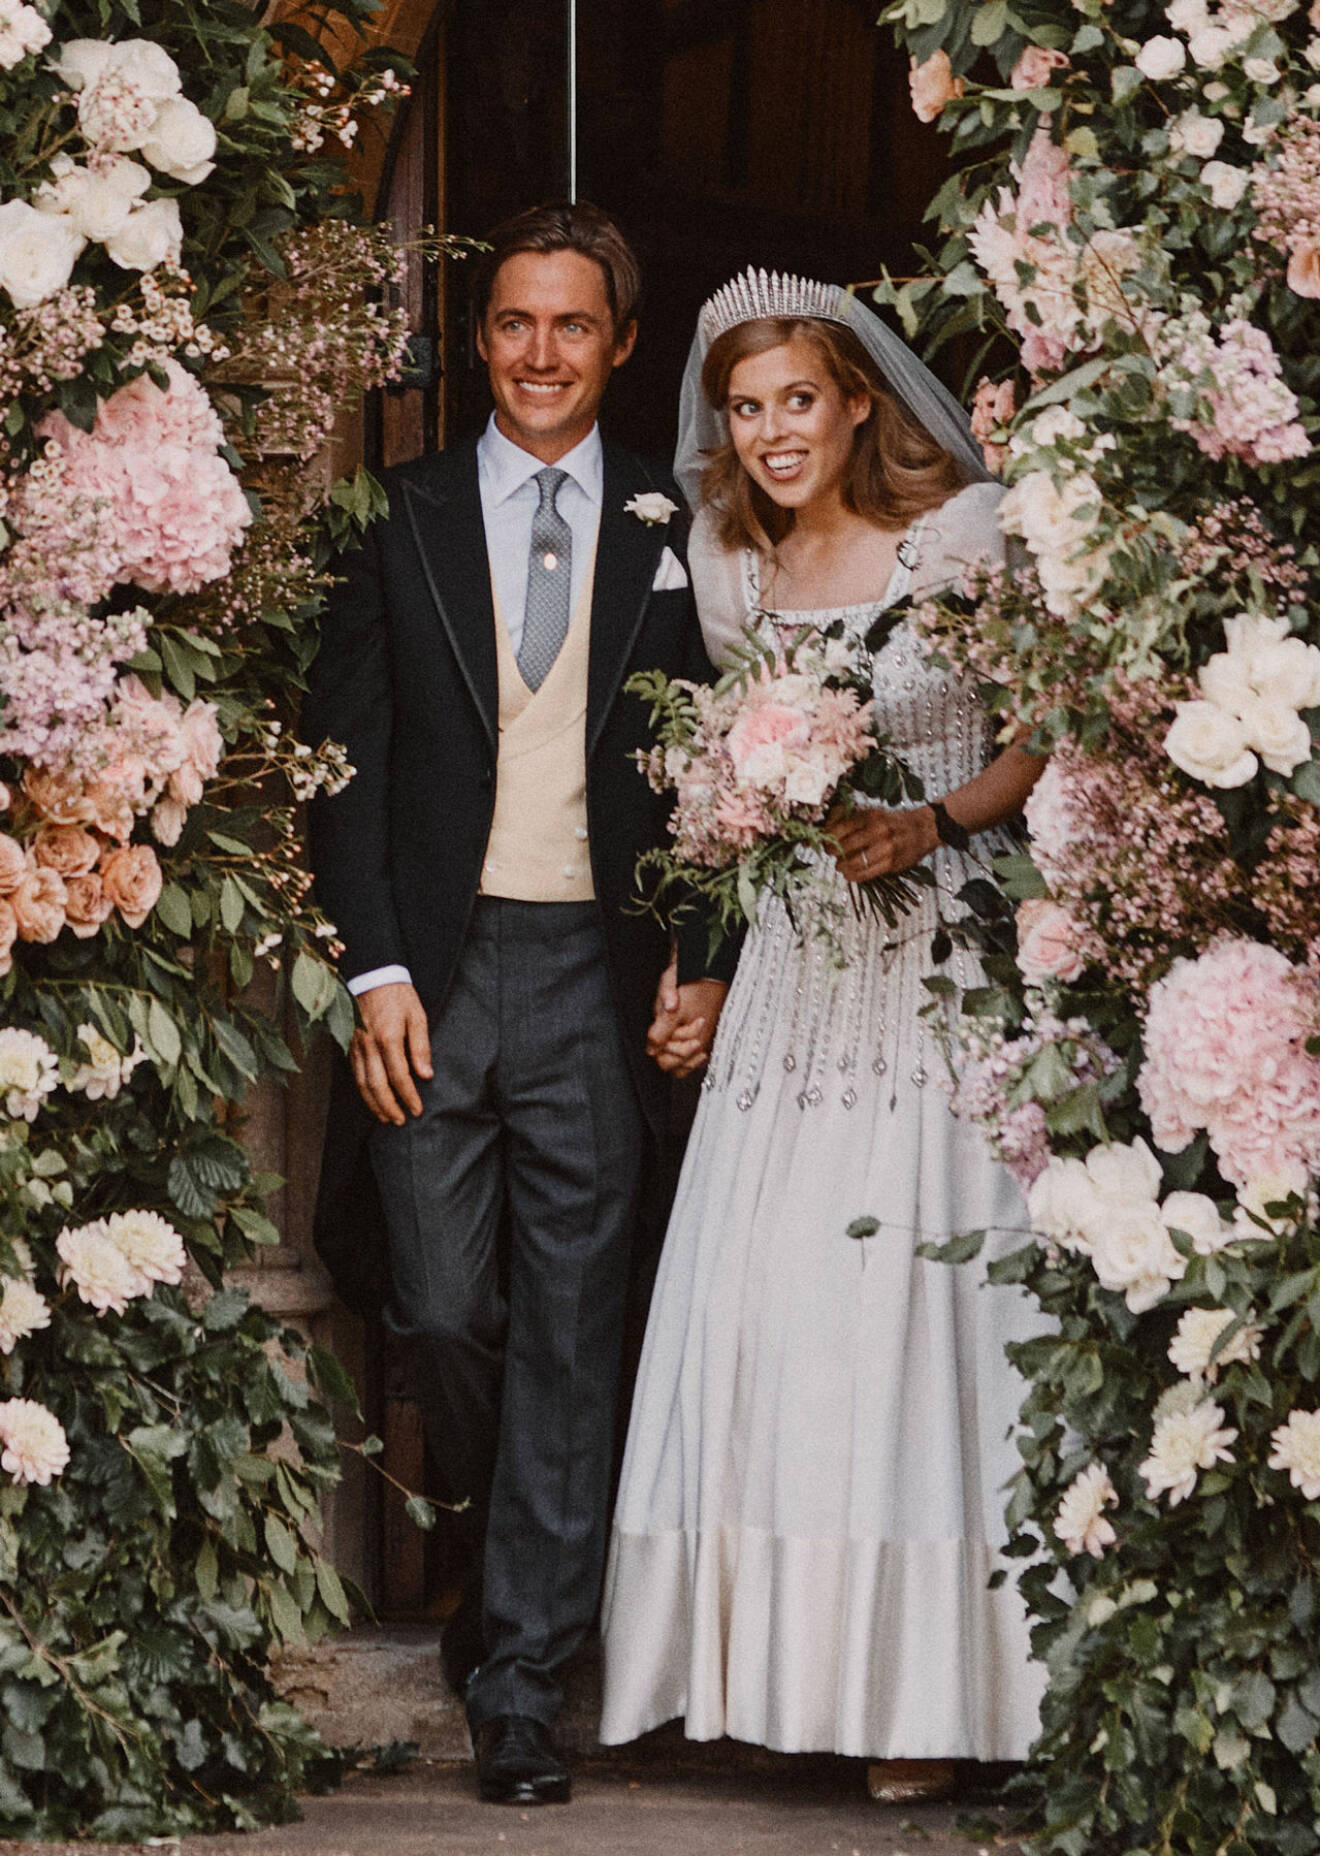 Prinsessan Beatrice och Edoardo Mapelli Mozzis bröllop.